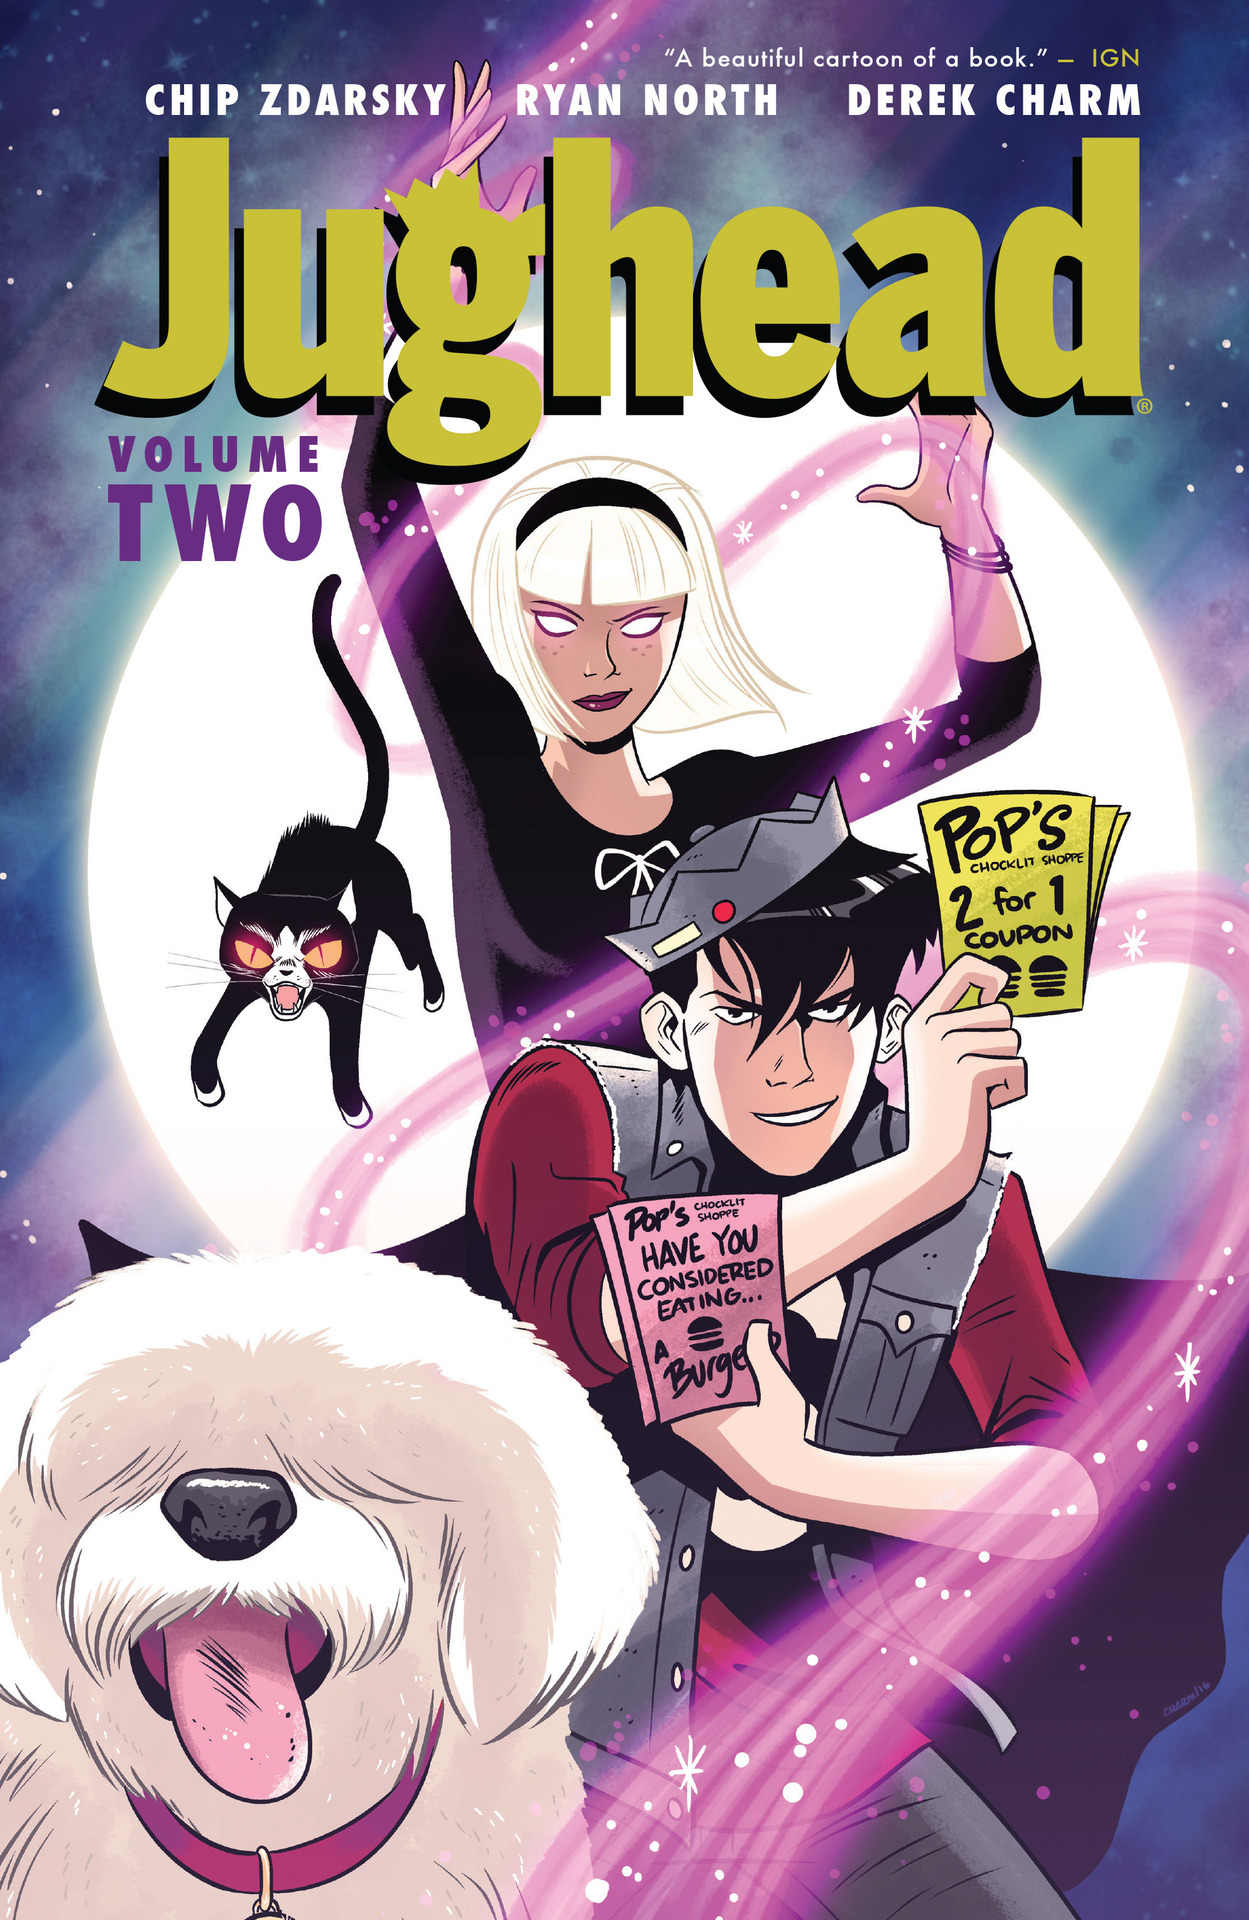 Geek insider, geekinsider, geekinsider. Com,, best comic i read: 'jughead' volume two, comics, entertainment